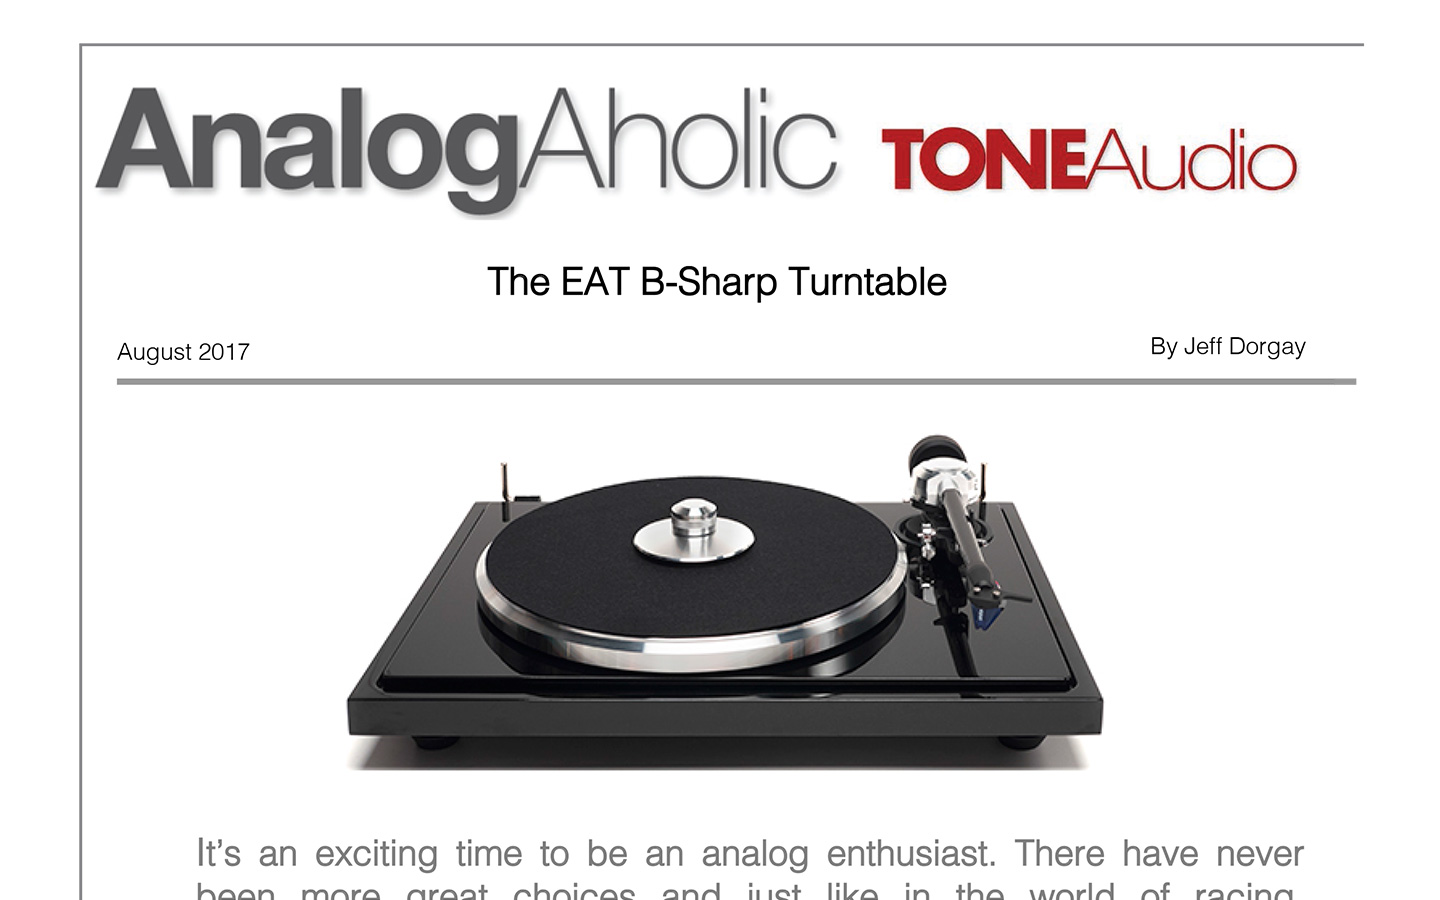 The E.A.T. B-Sharp Turntable Analogaholic TONE AUDIO magazine